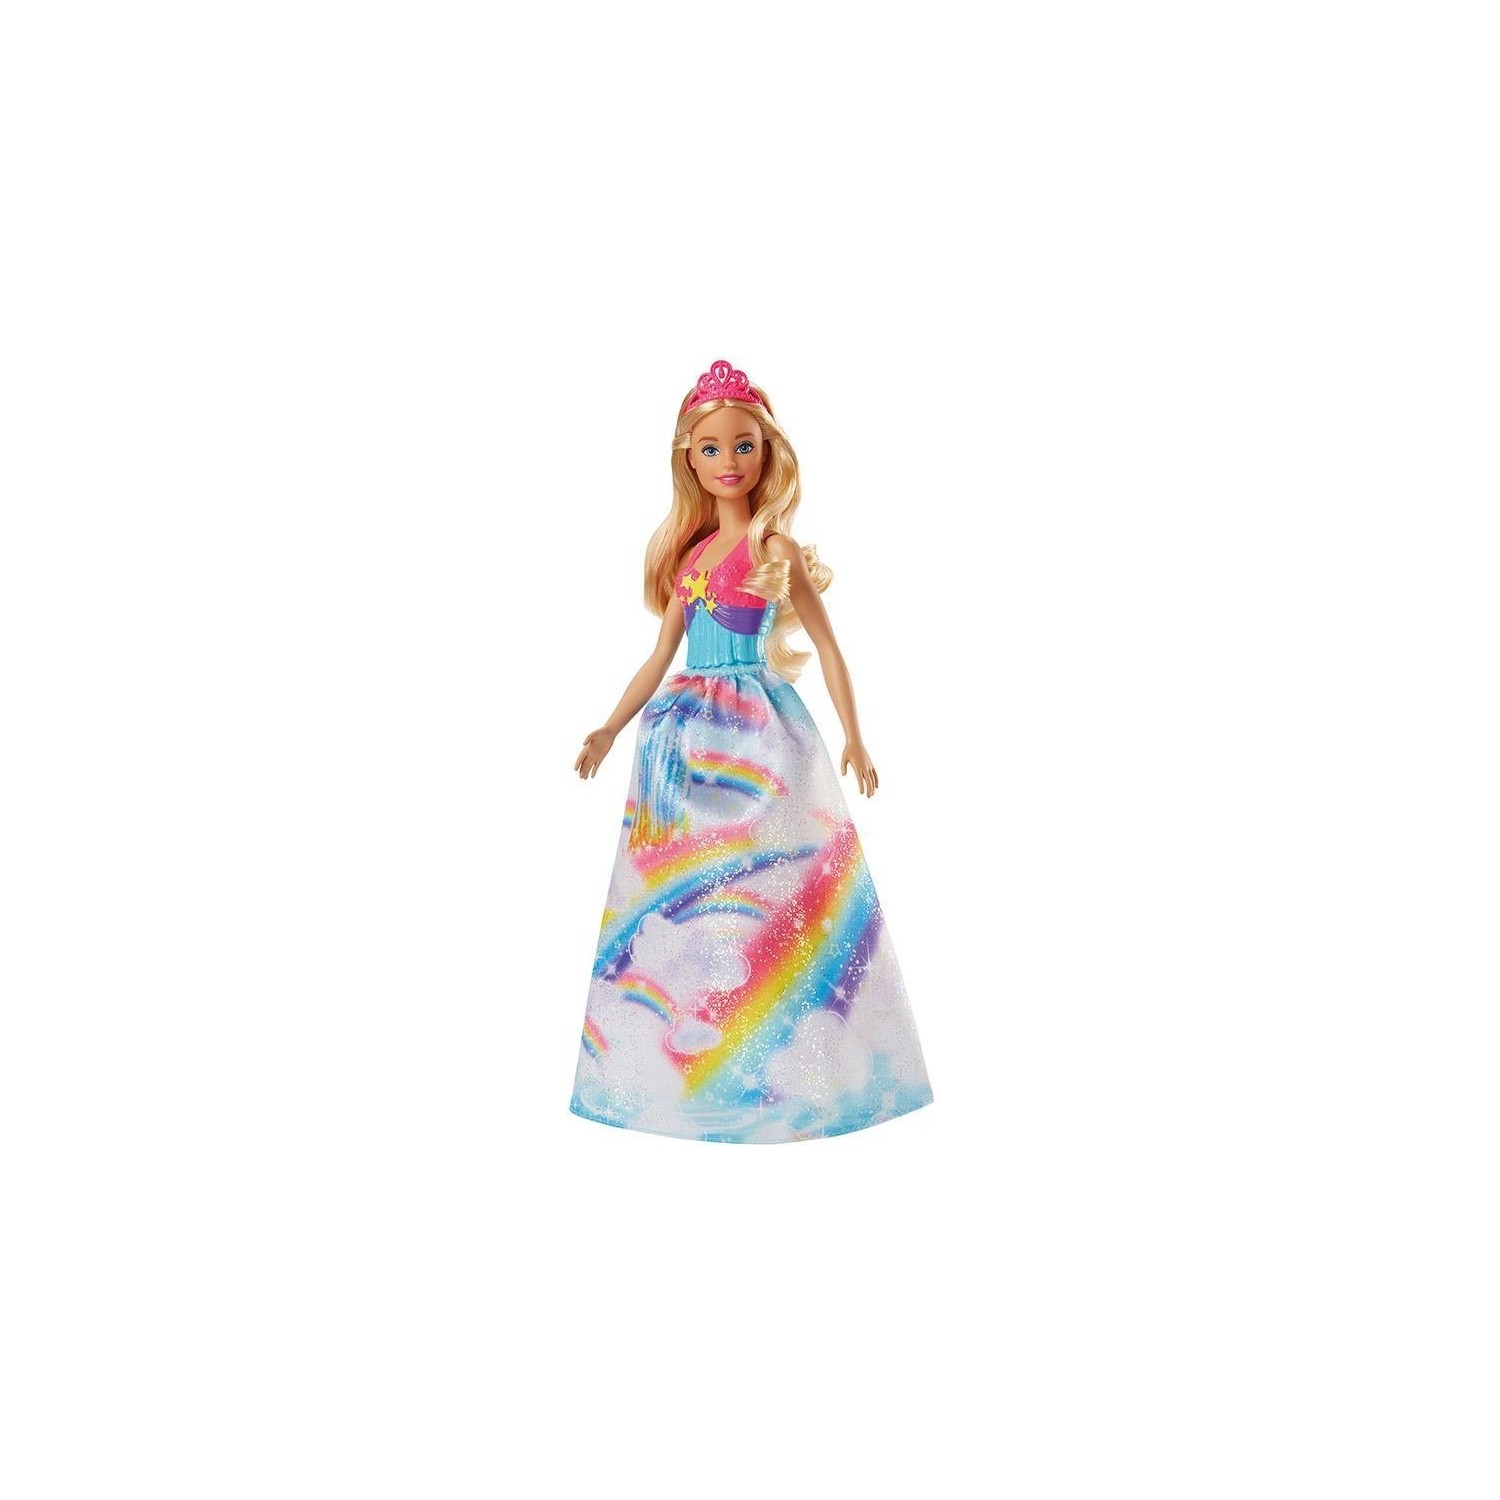 Кукла Barbie Dreamtopia Princess Dolls Fjc94 кукла barbie dreamtopia long hair dolls gtf37